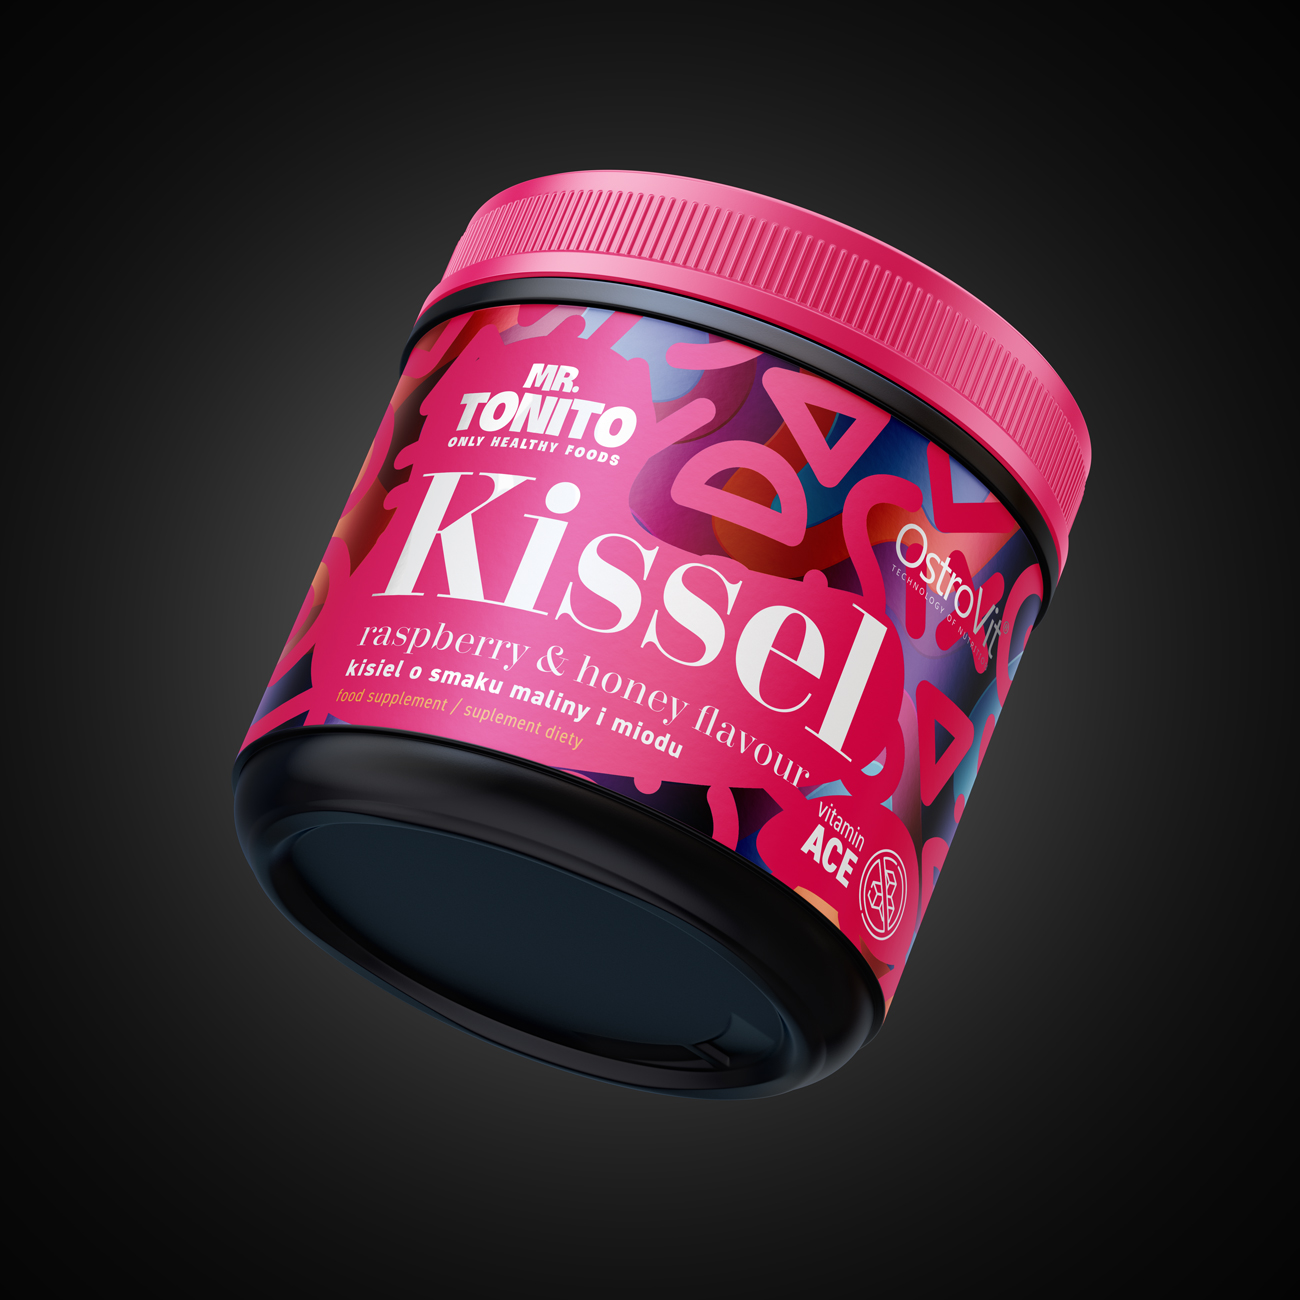 Projekt Kissel supplement packaging design